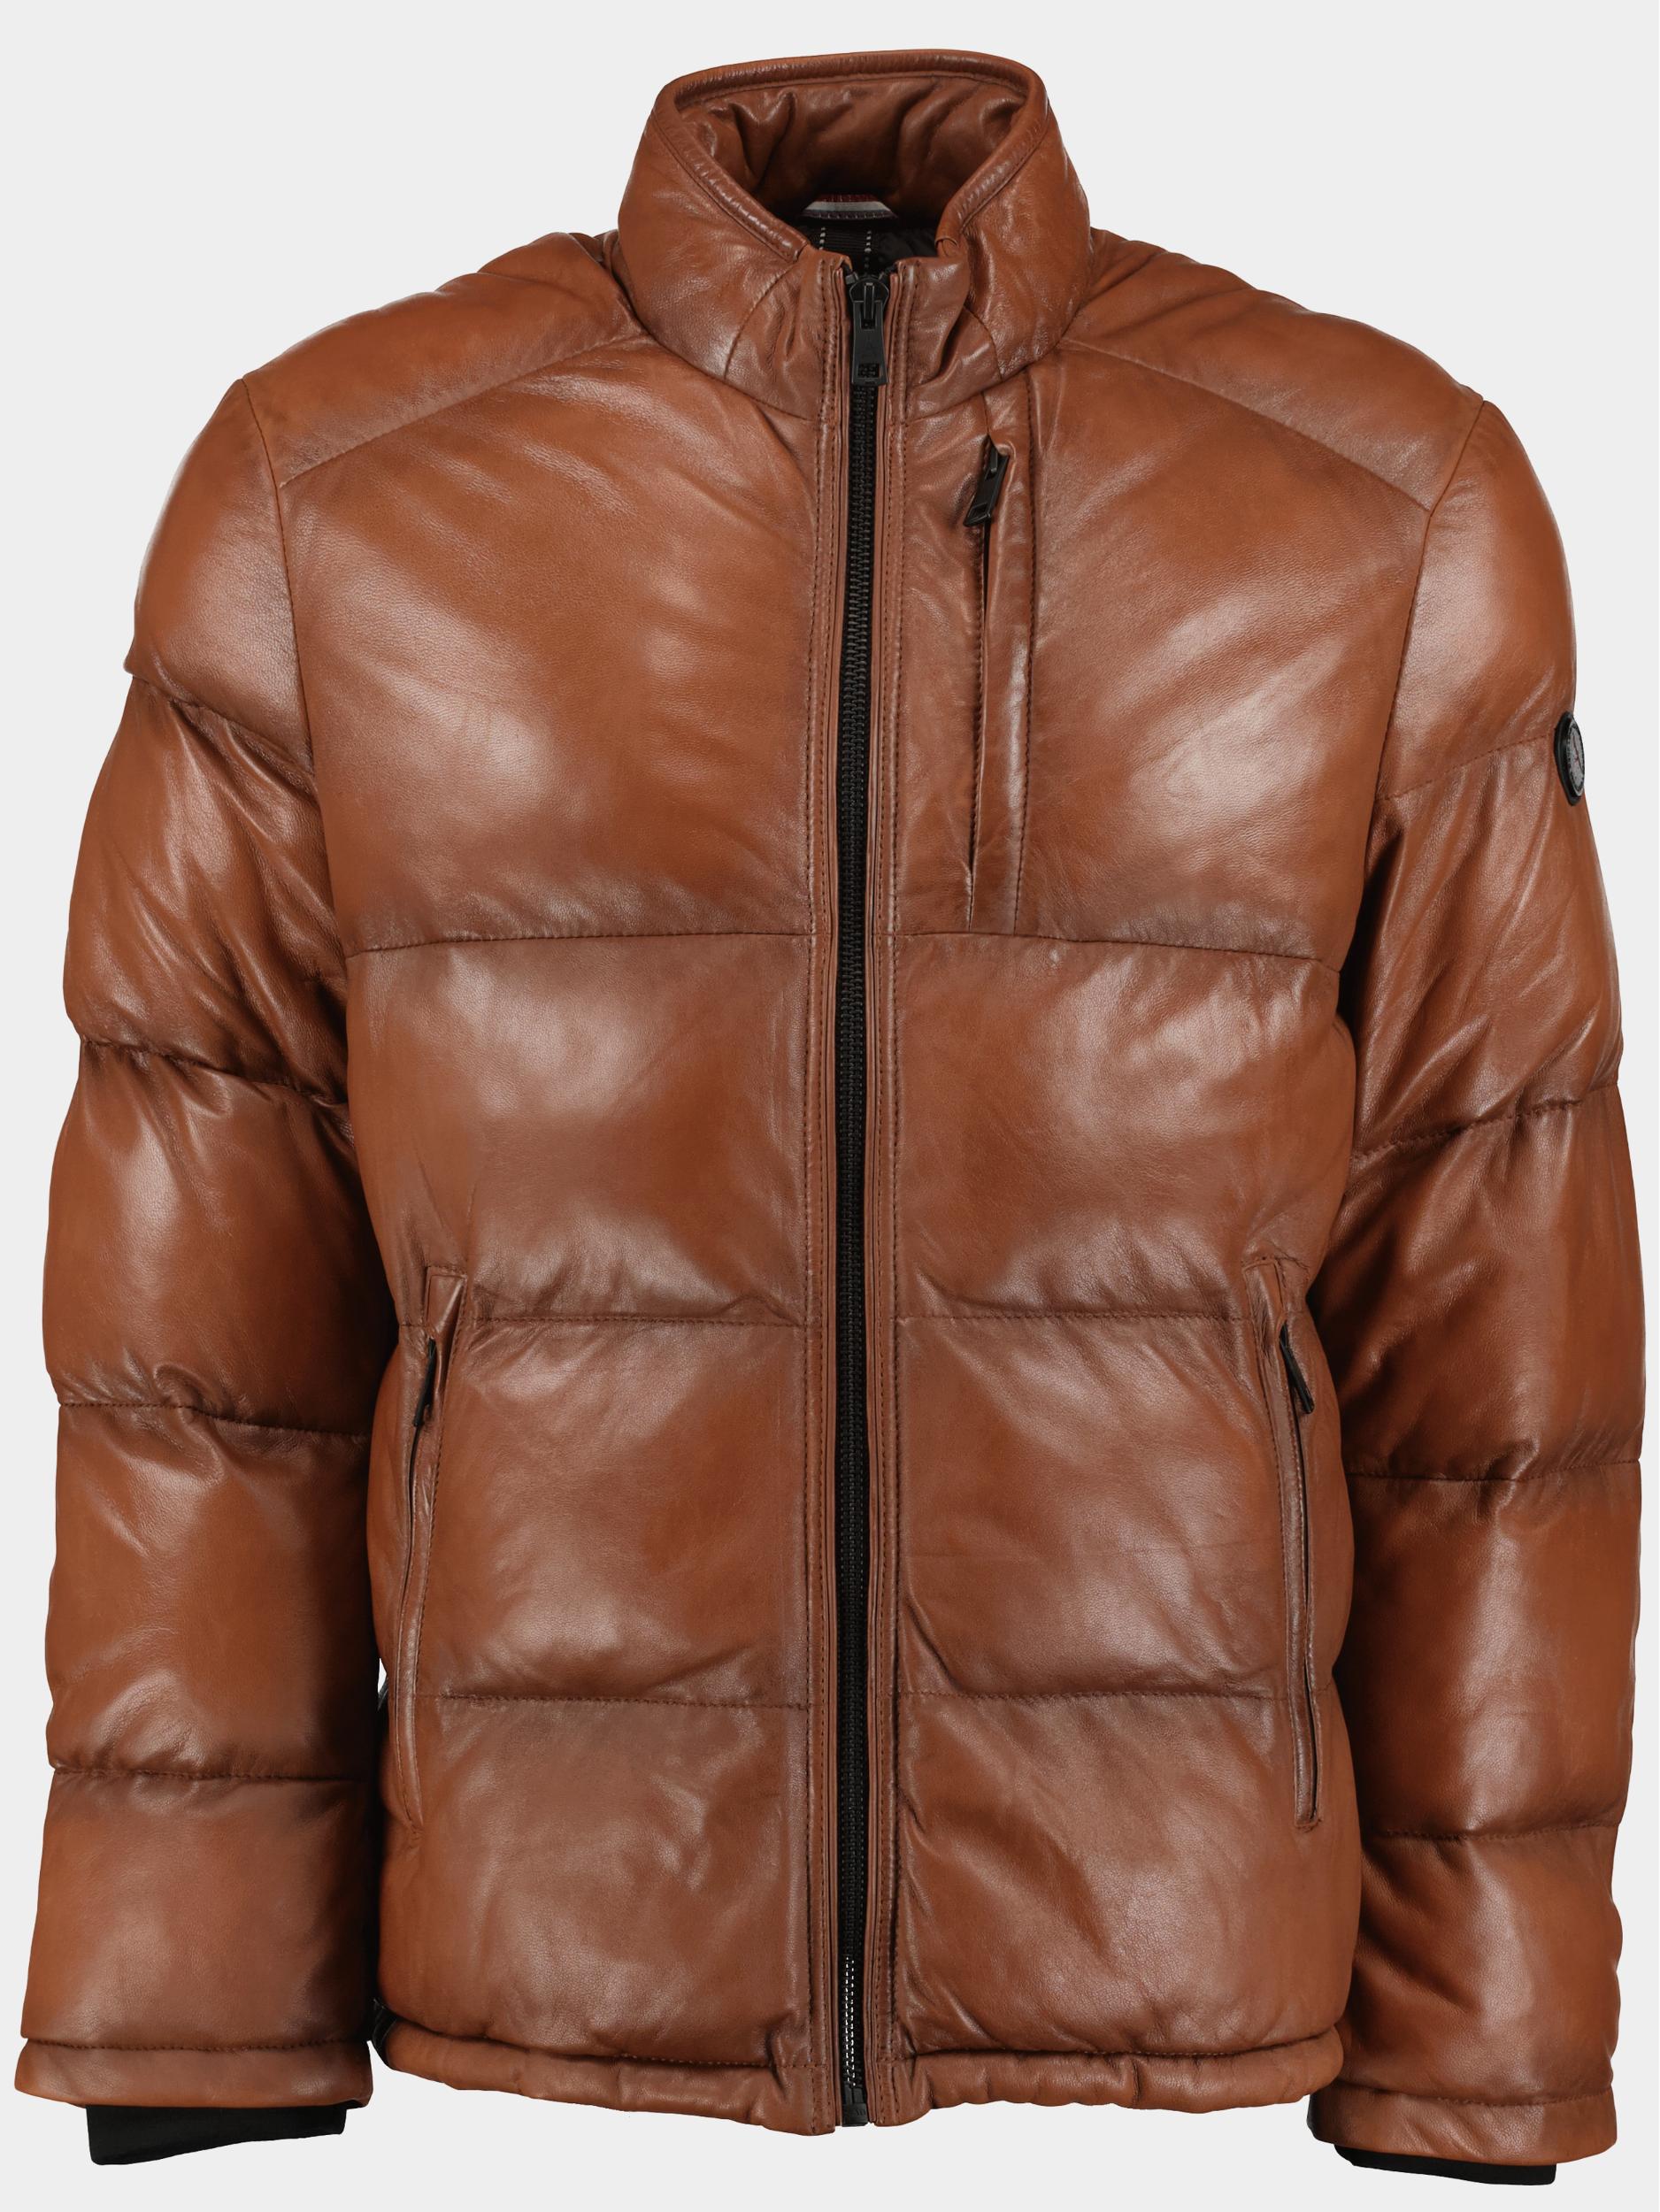 Afbeelding van DNR Lederen jack leather jacket 52411/461